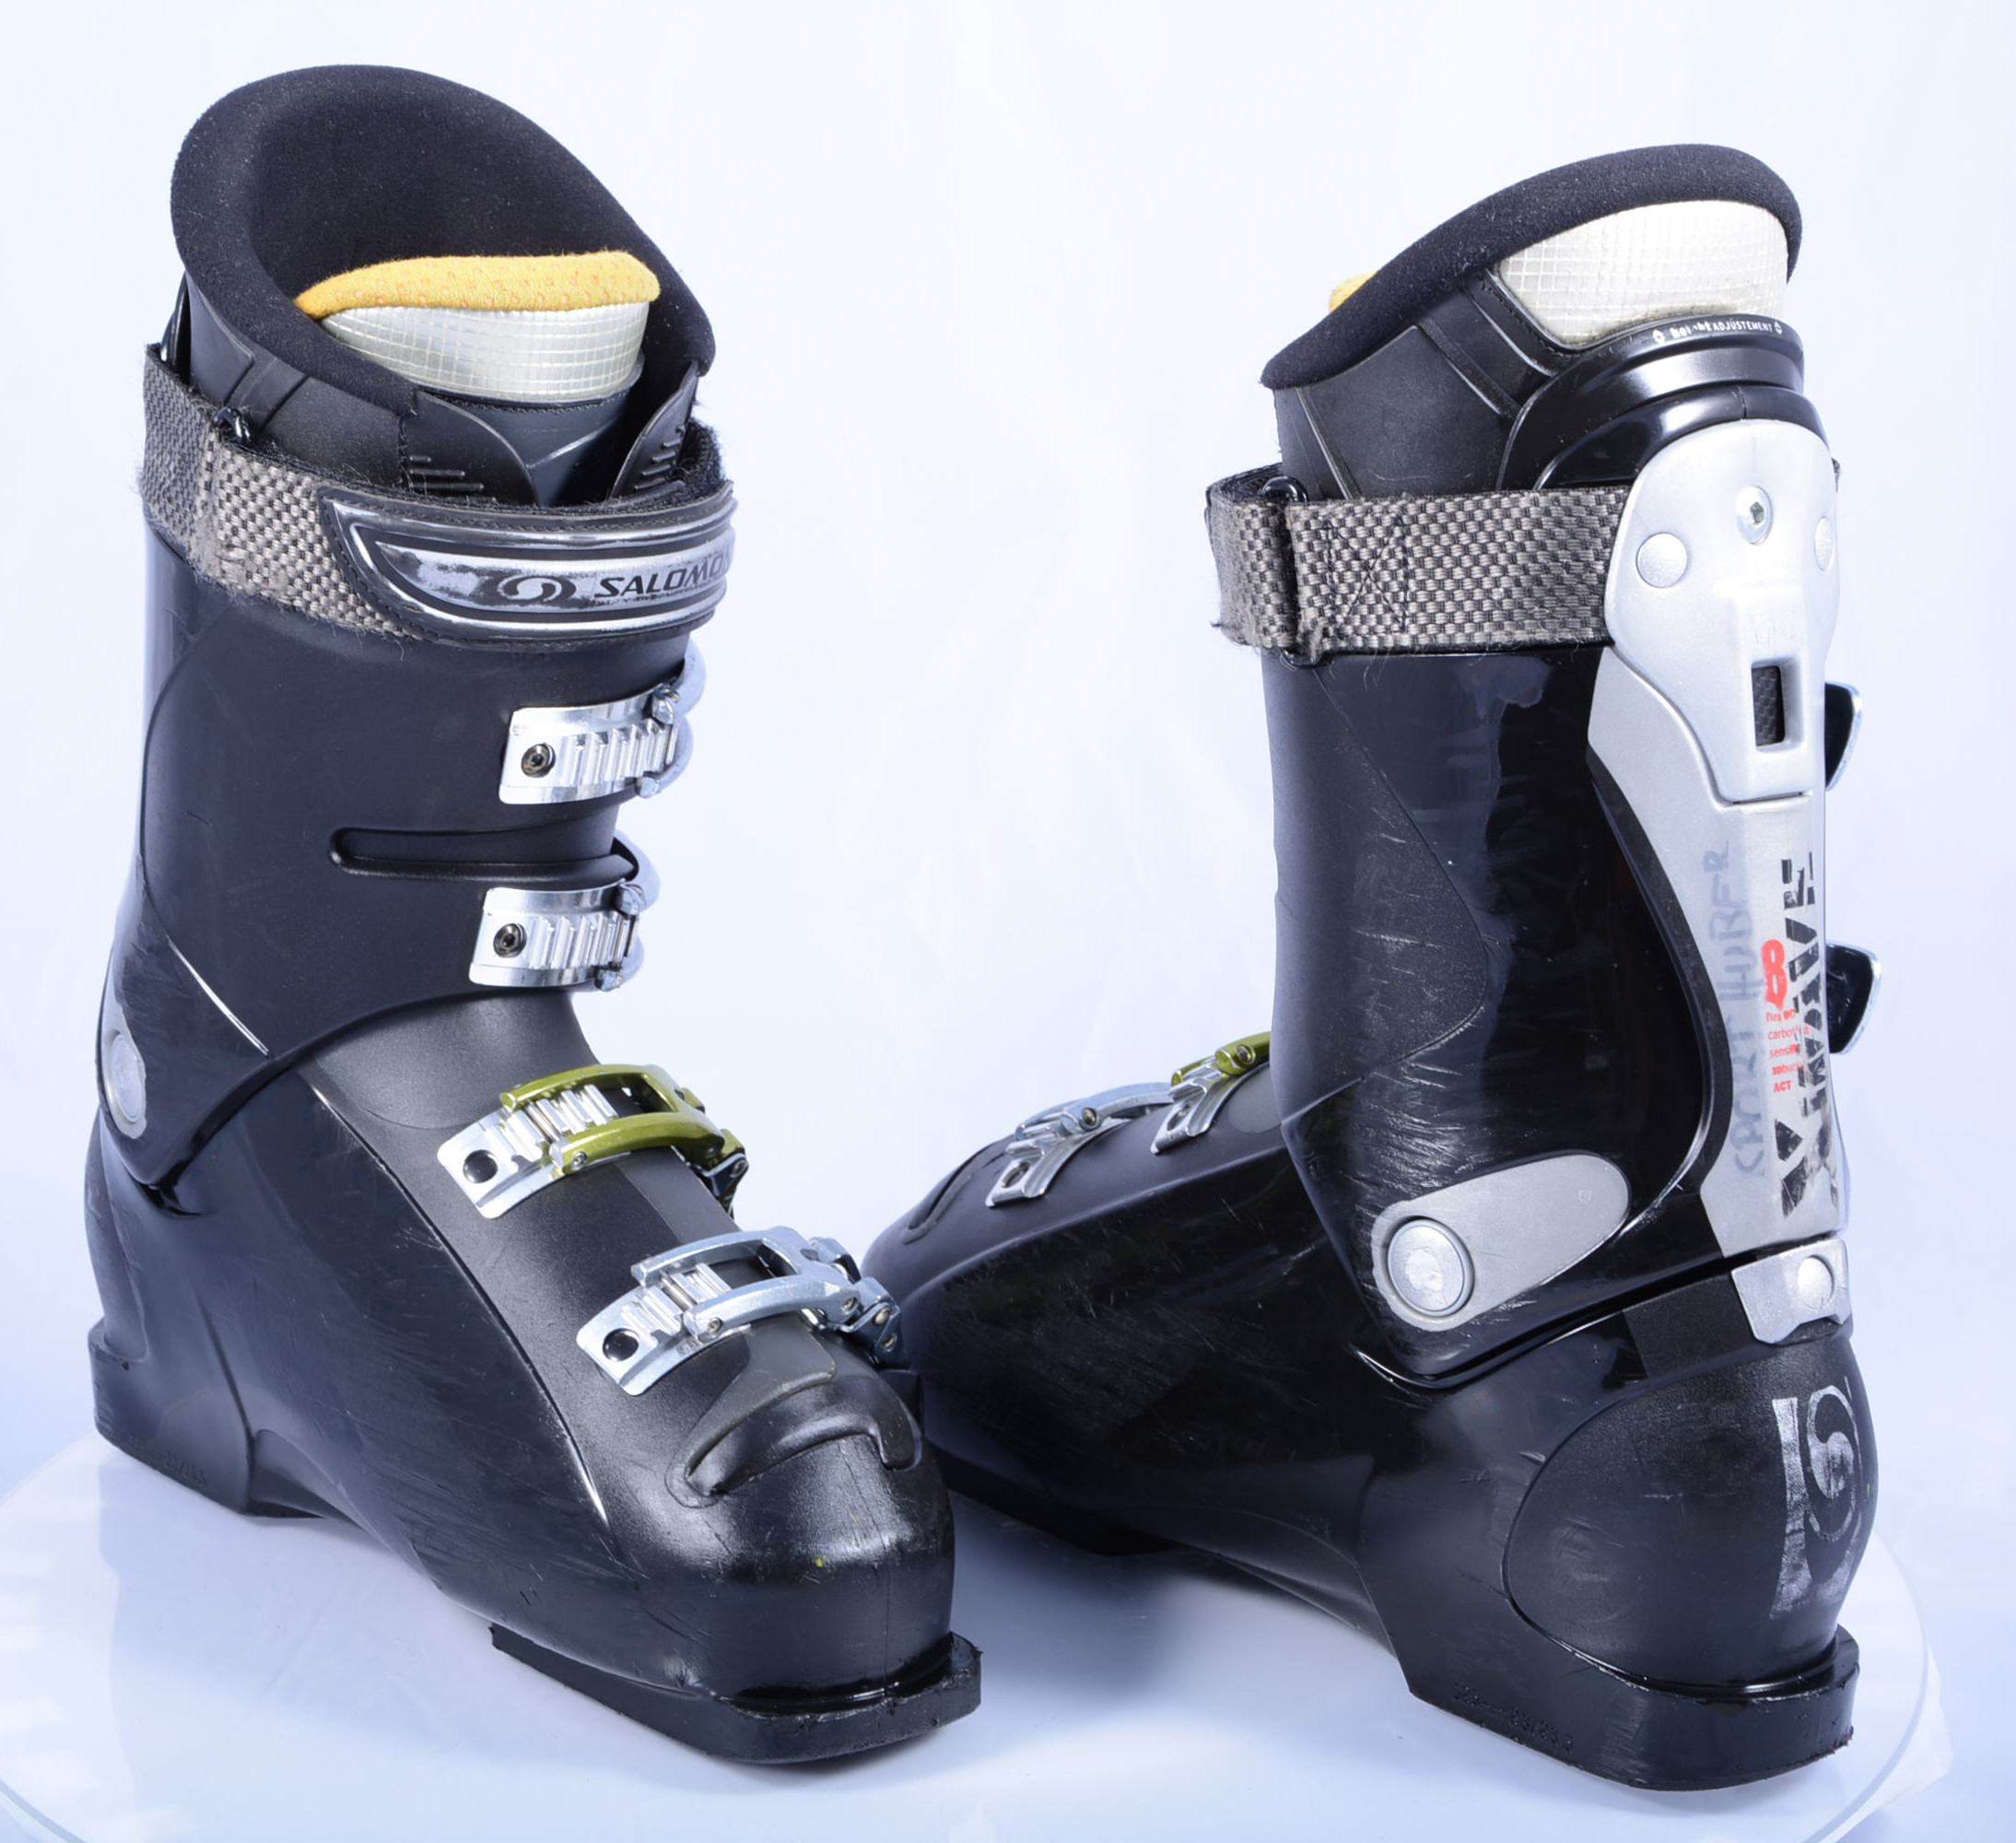 ski boots X WAVE 8, X, flex 90, link, sensifit, 3D buckles, ACT, chassis tech. Height adj. - Mardosport.com